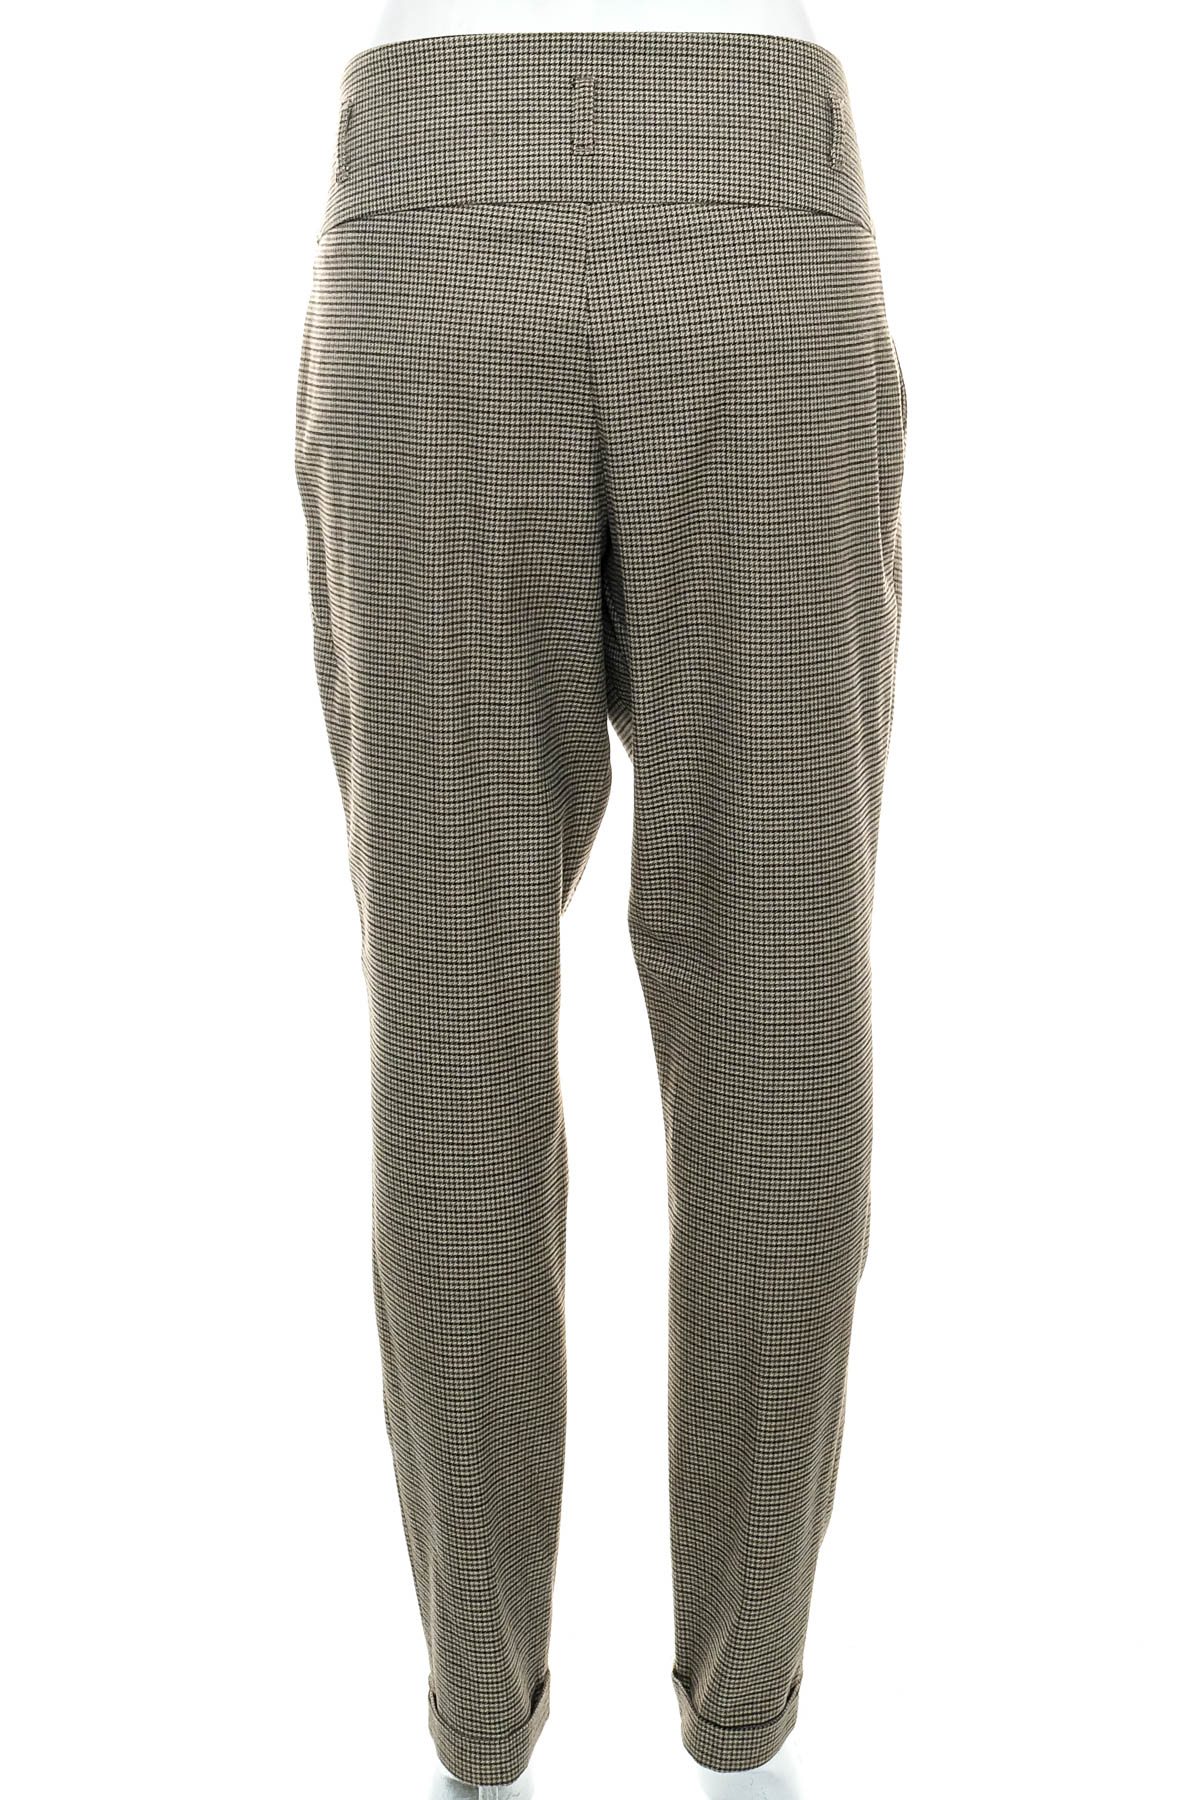 Women's trousers - KISCHE - 1